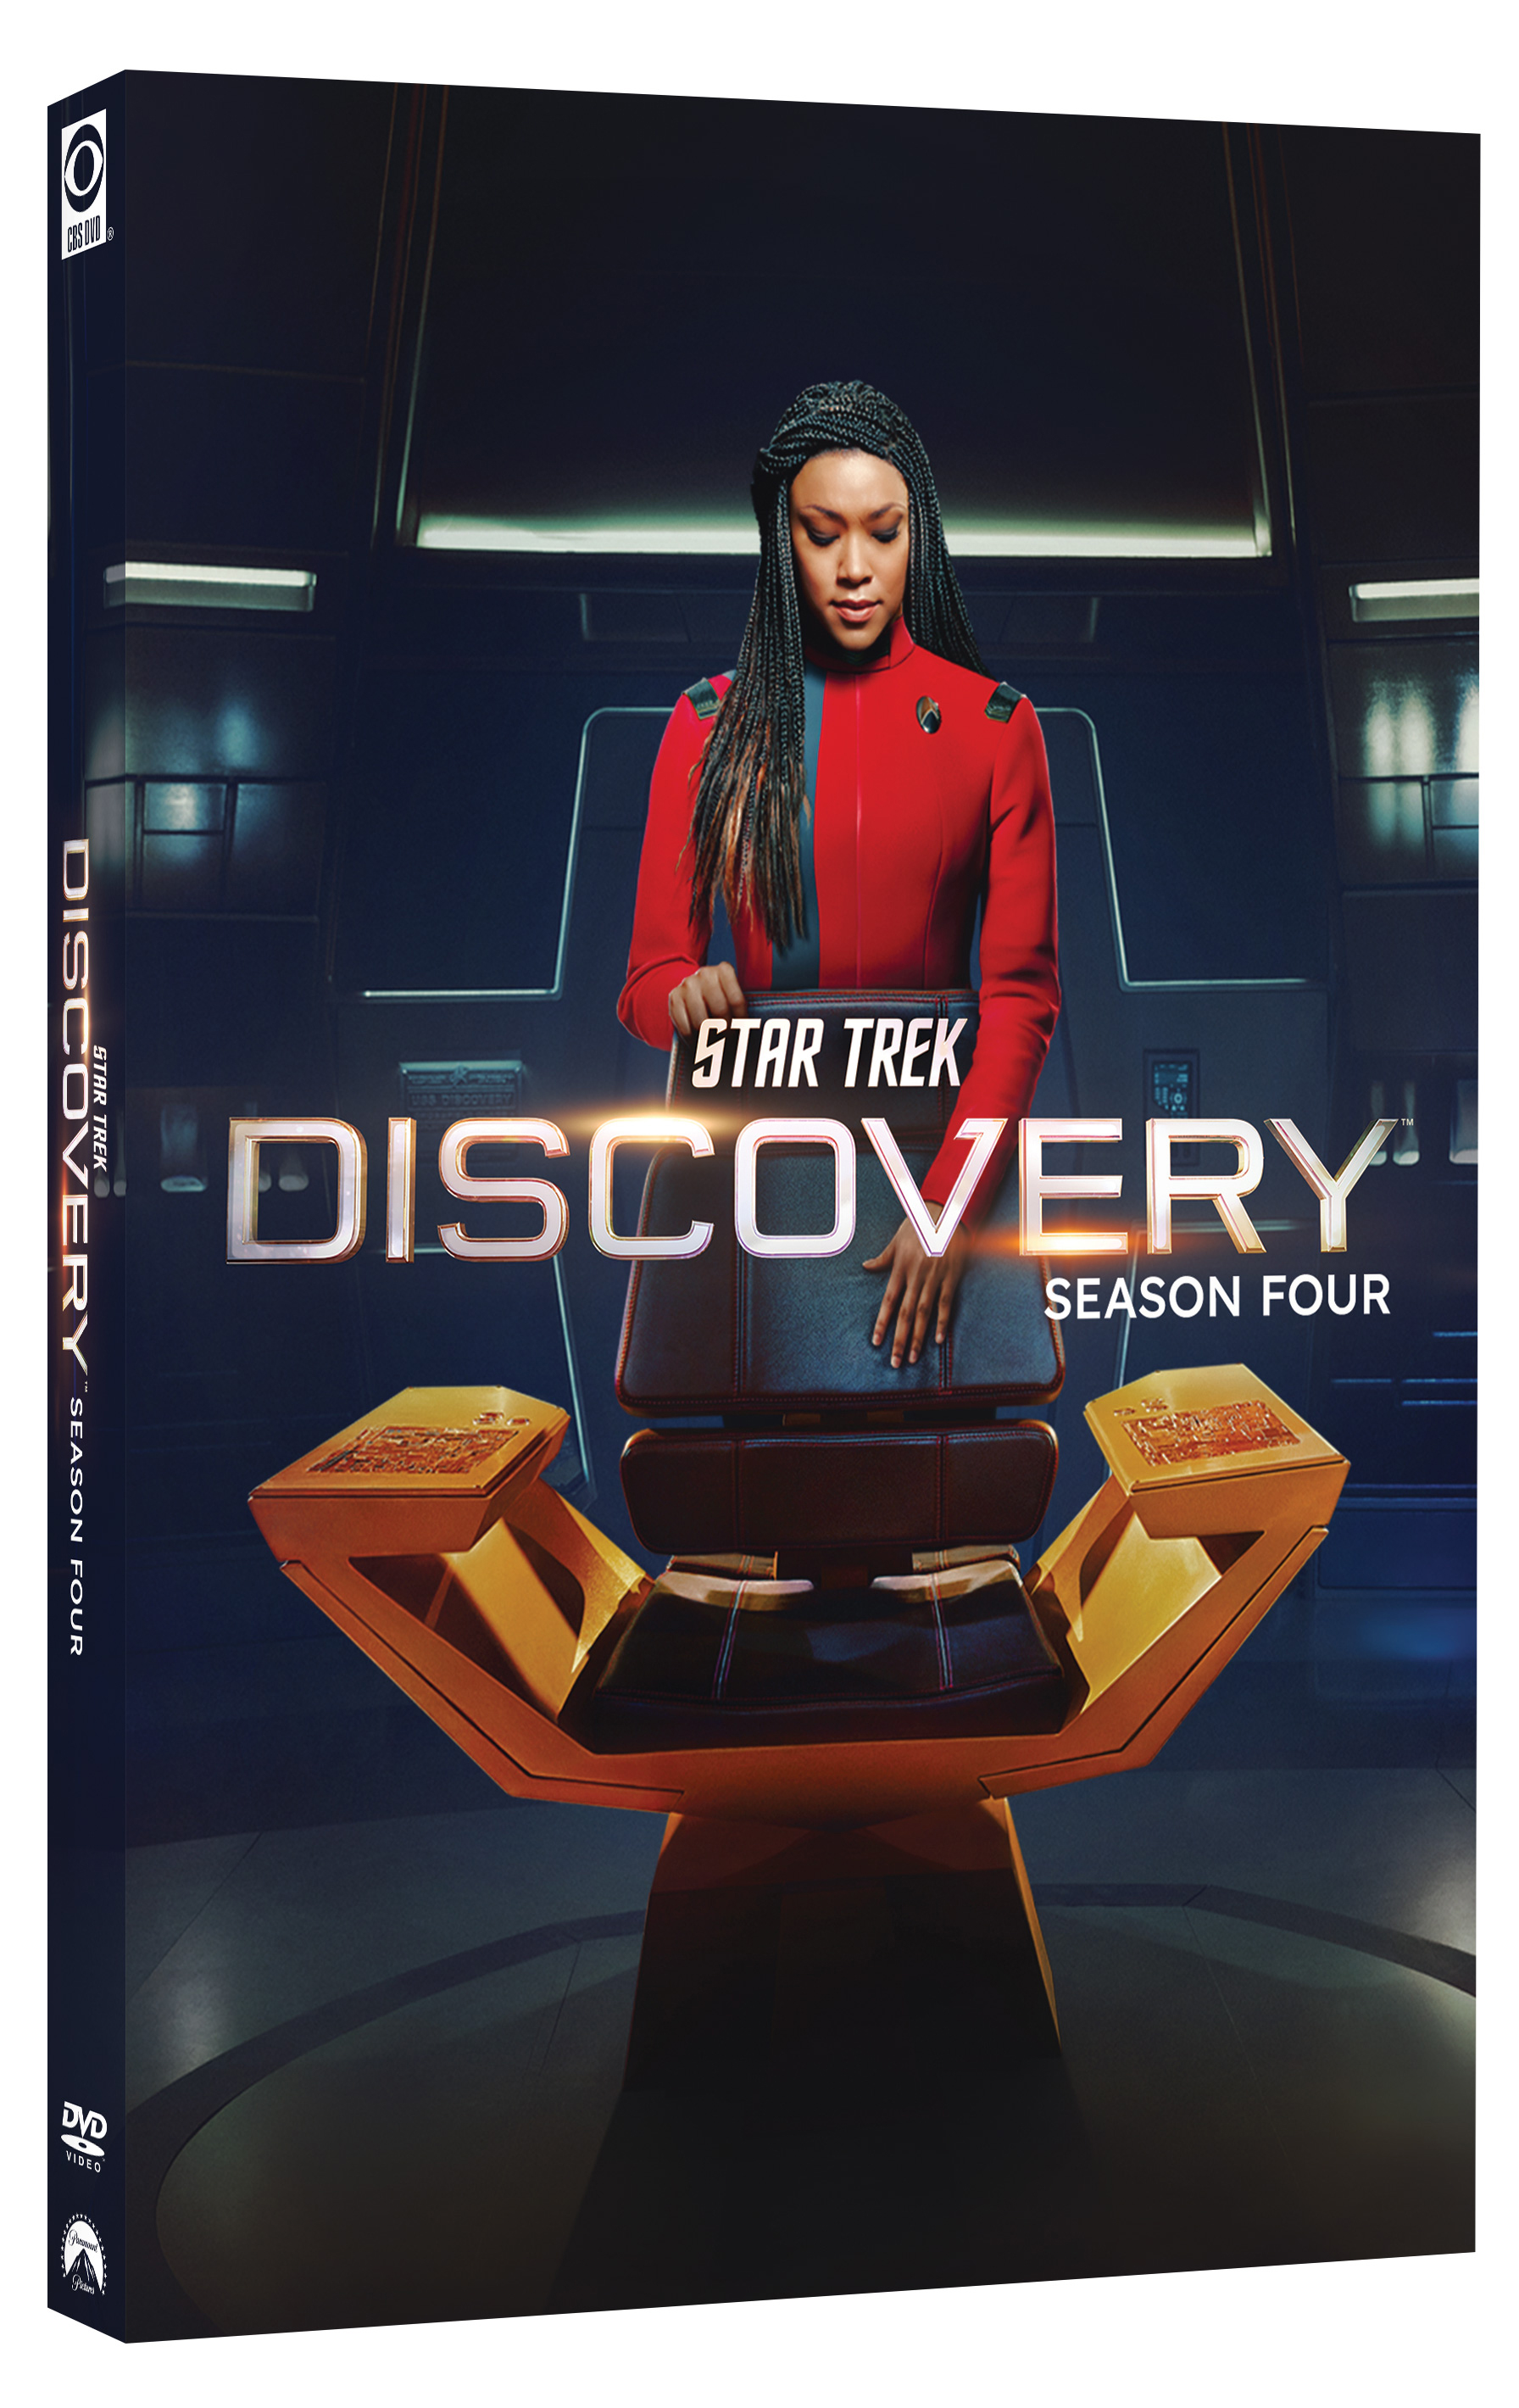 

Star Trek: Discovery - Season Four